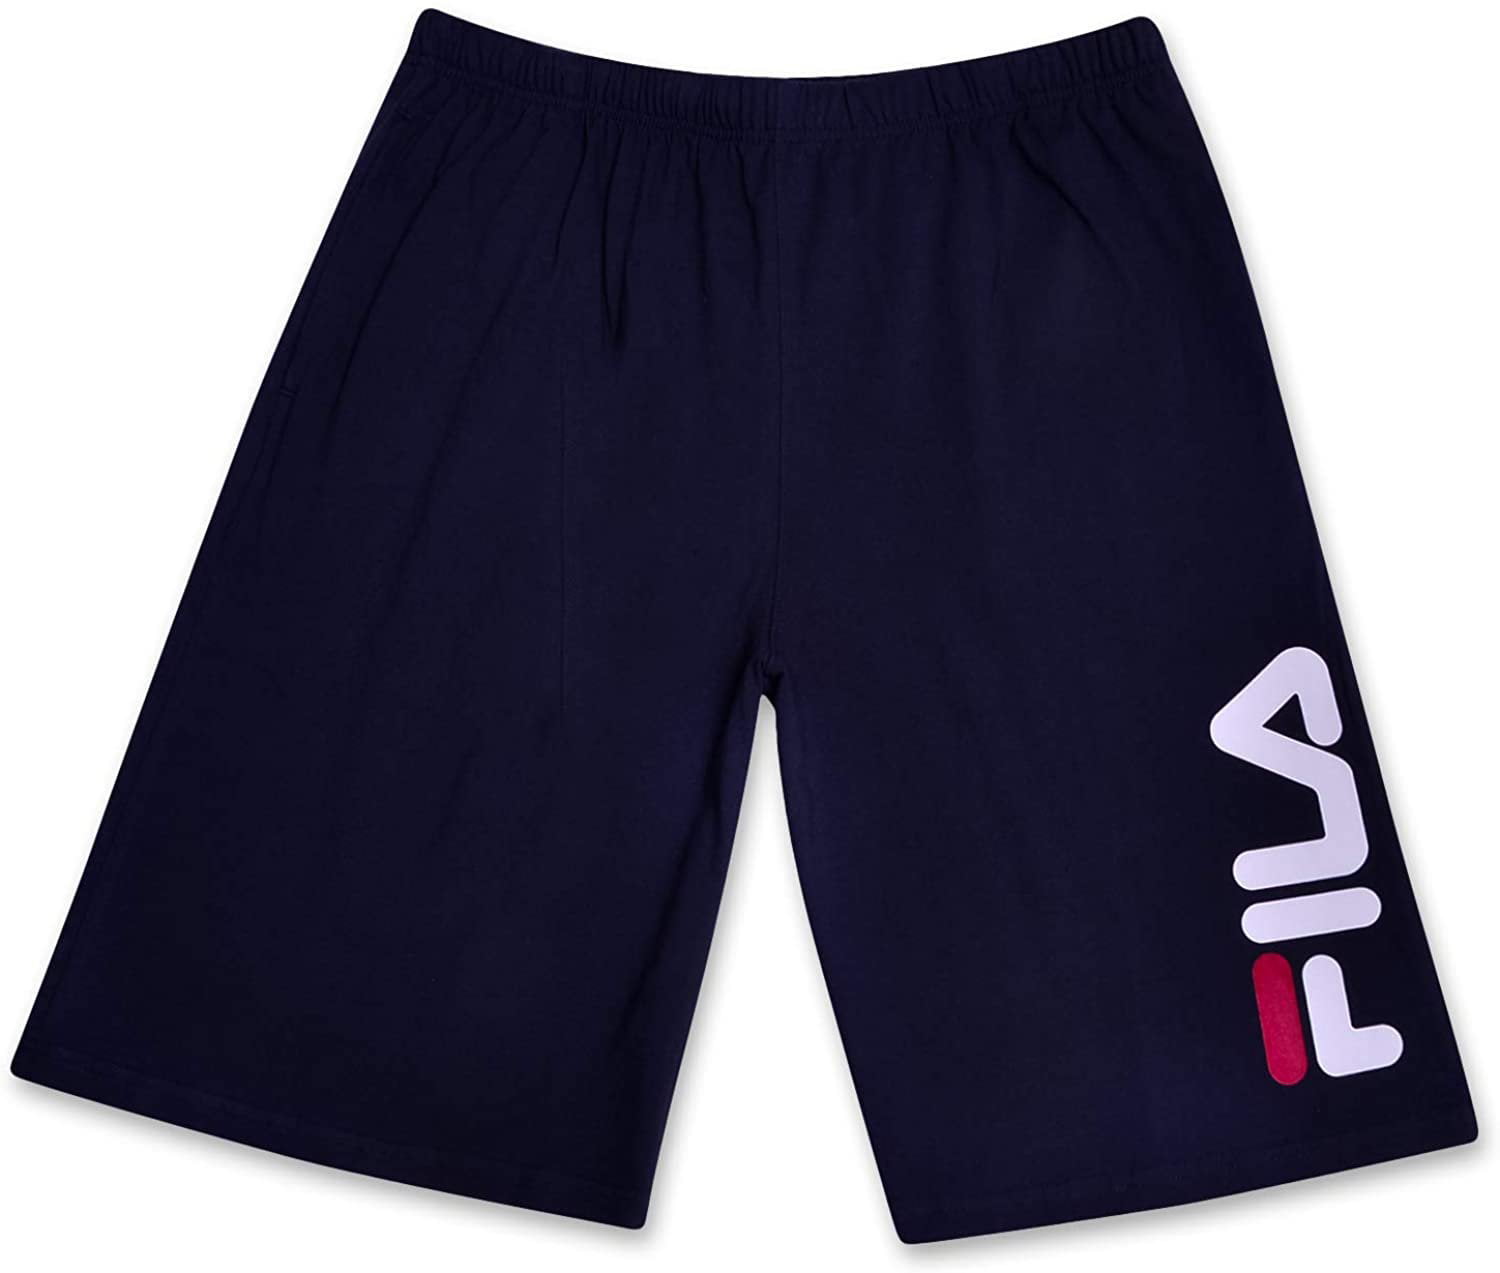 FILA - and Tall Mens Cotton Jersey Active Gym Shorts with Adjustable Waistband Navy 3X - Walmart.com Walmart.com